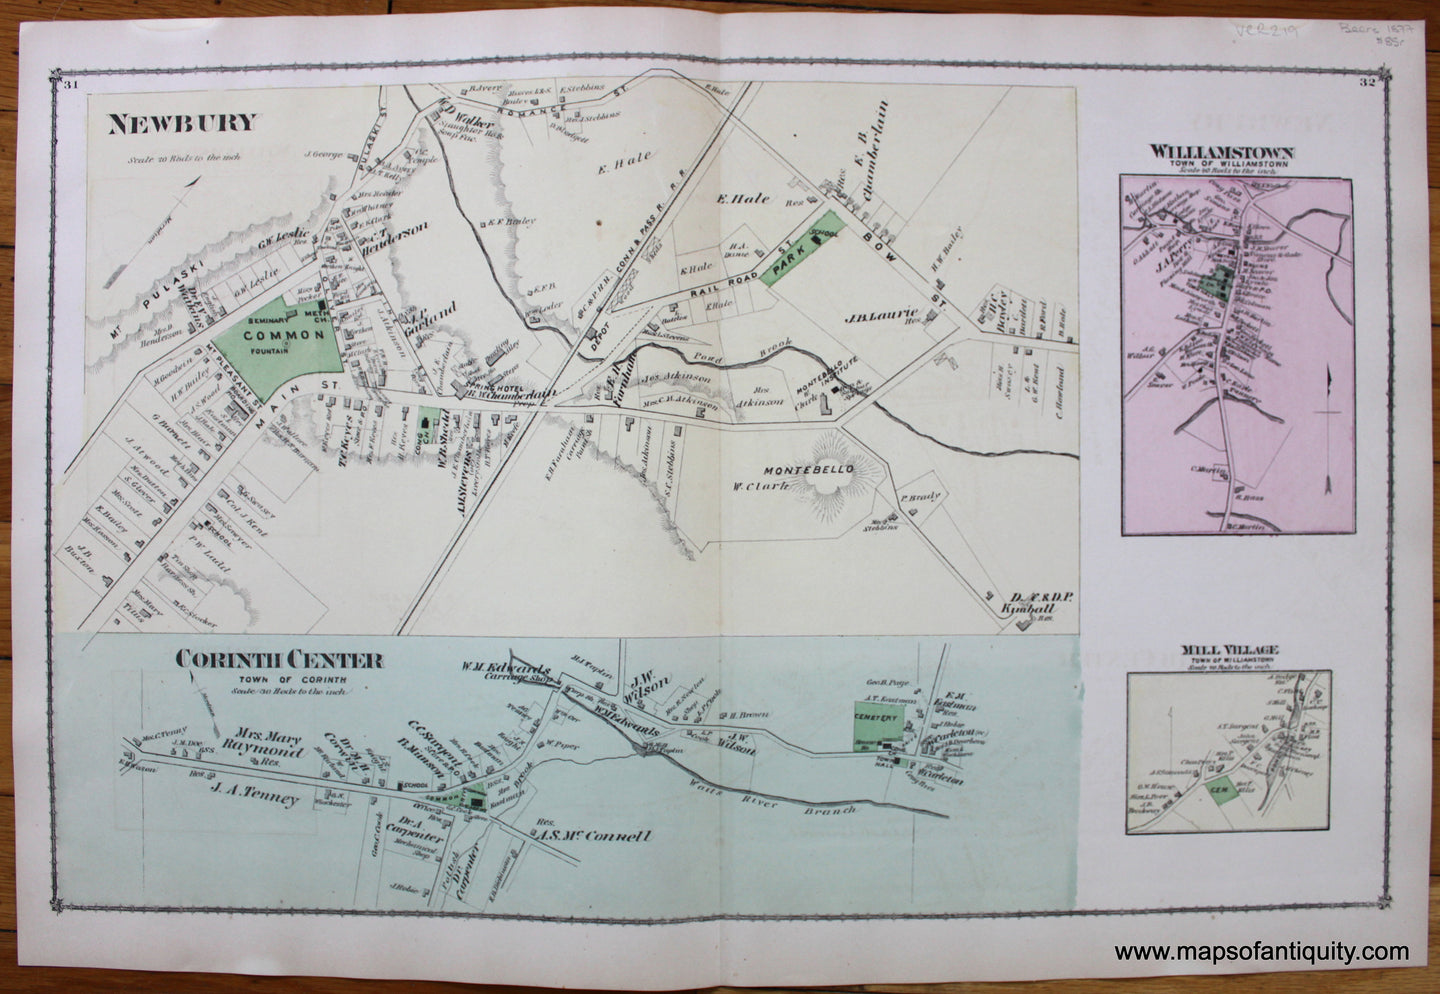 Newbury-Corinth-Center-Williamstown-Mill-Village-1877-Beers-Antique-Map-Vermont-Orange-County-1870s-1800s-19th-century-Maps-of-Antiquity